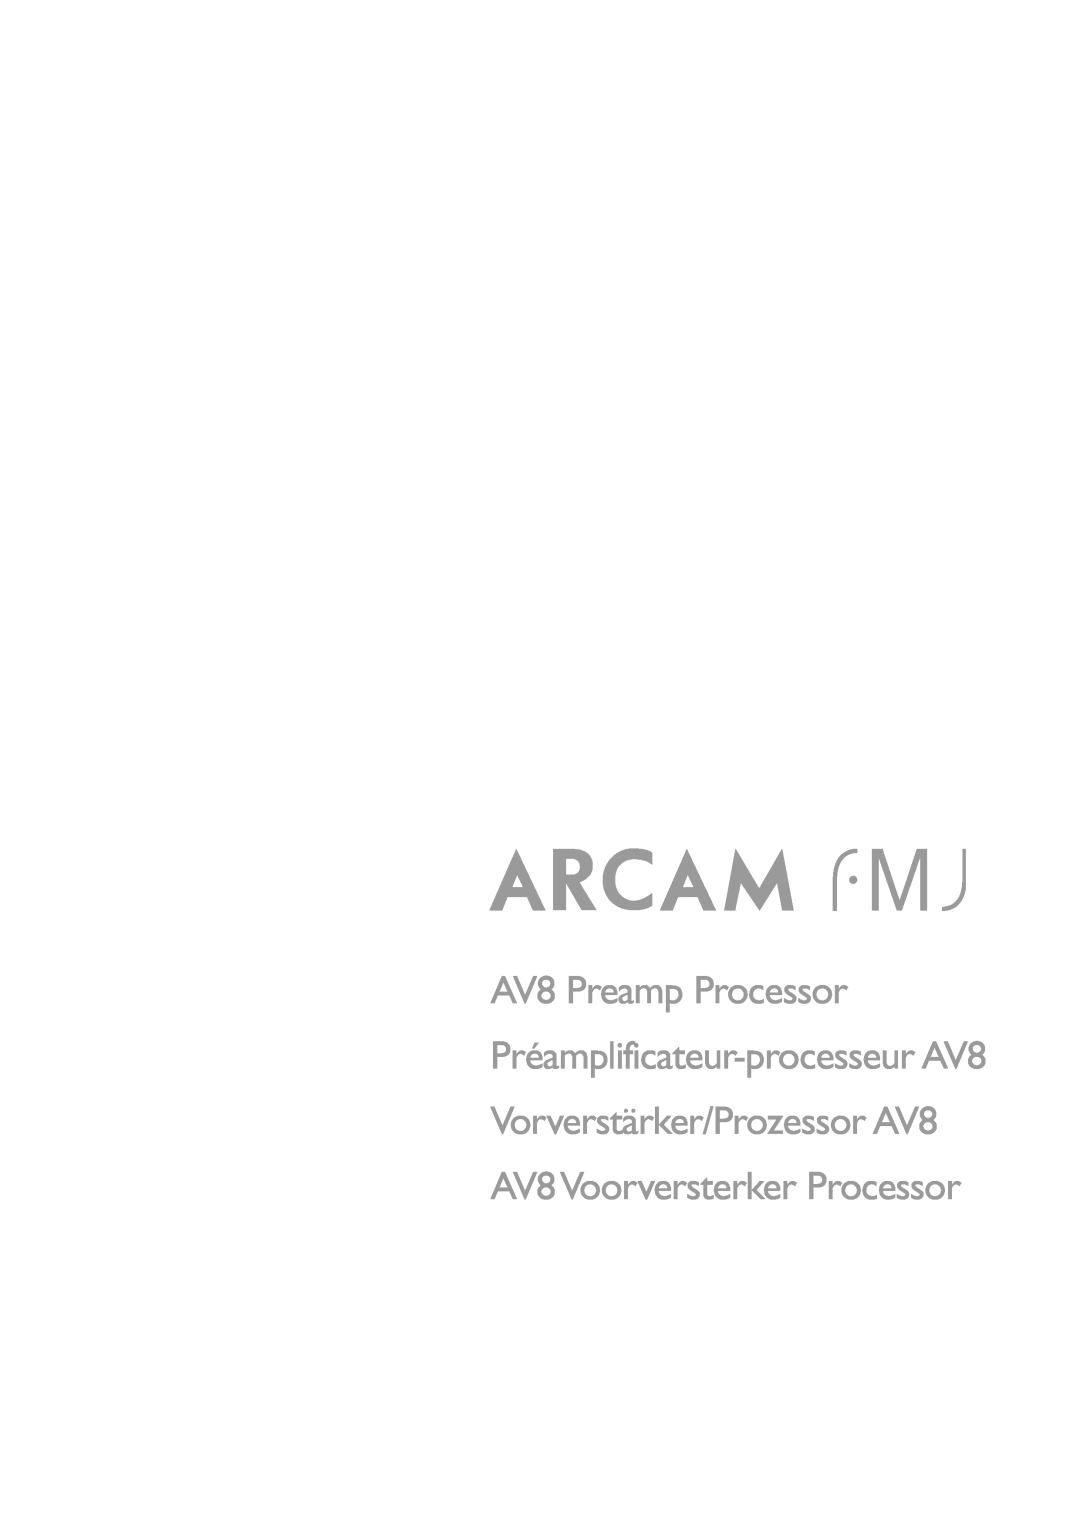 Arcam E-2 manual AV8 Preamp Processor, Préamplificateur-processeurAV8, Vorverstärker/Prozessor AV8 